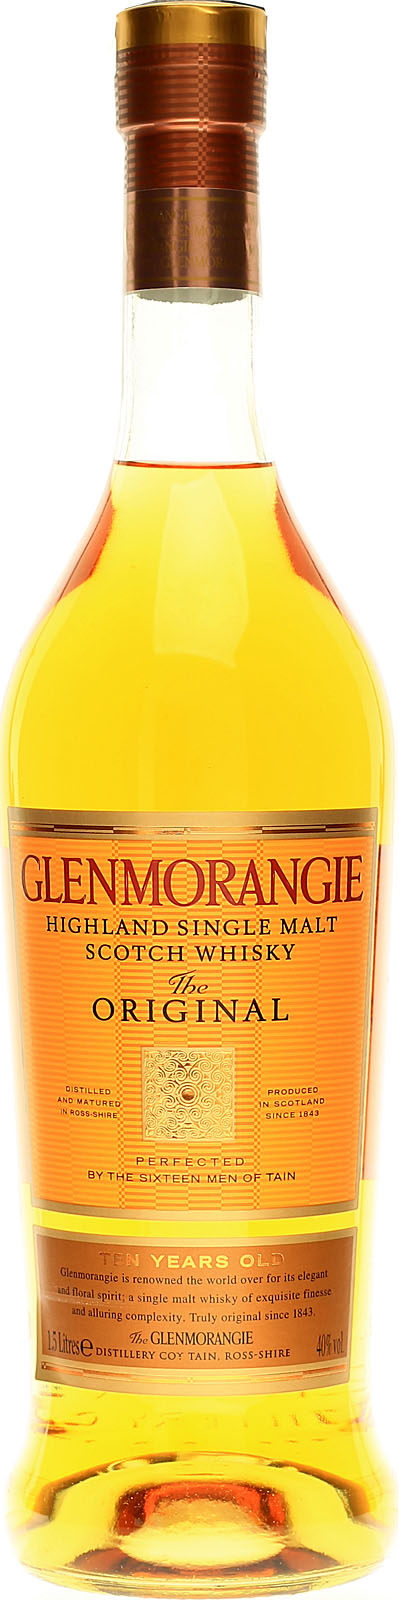 The Highland Single Malt Original Glenmorangie Magnum,